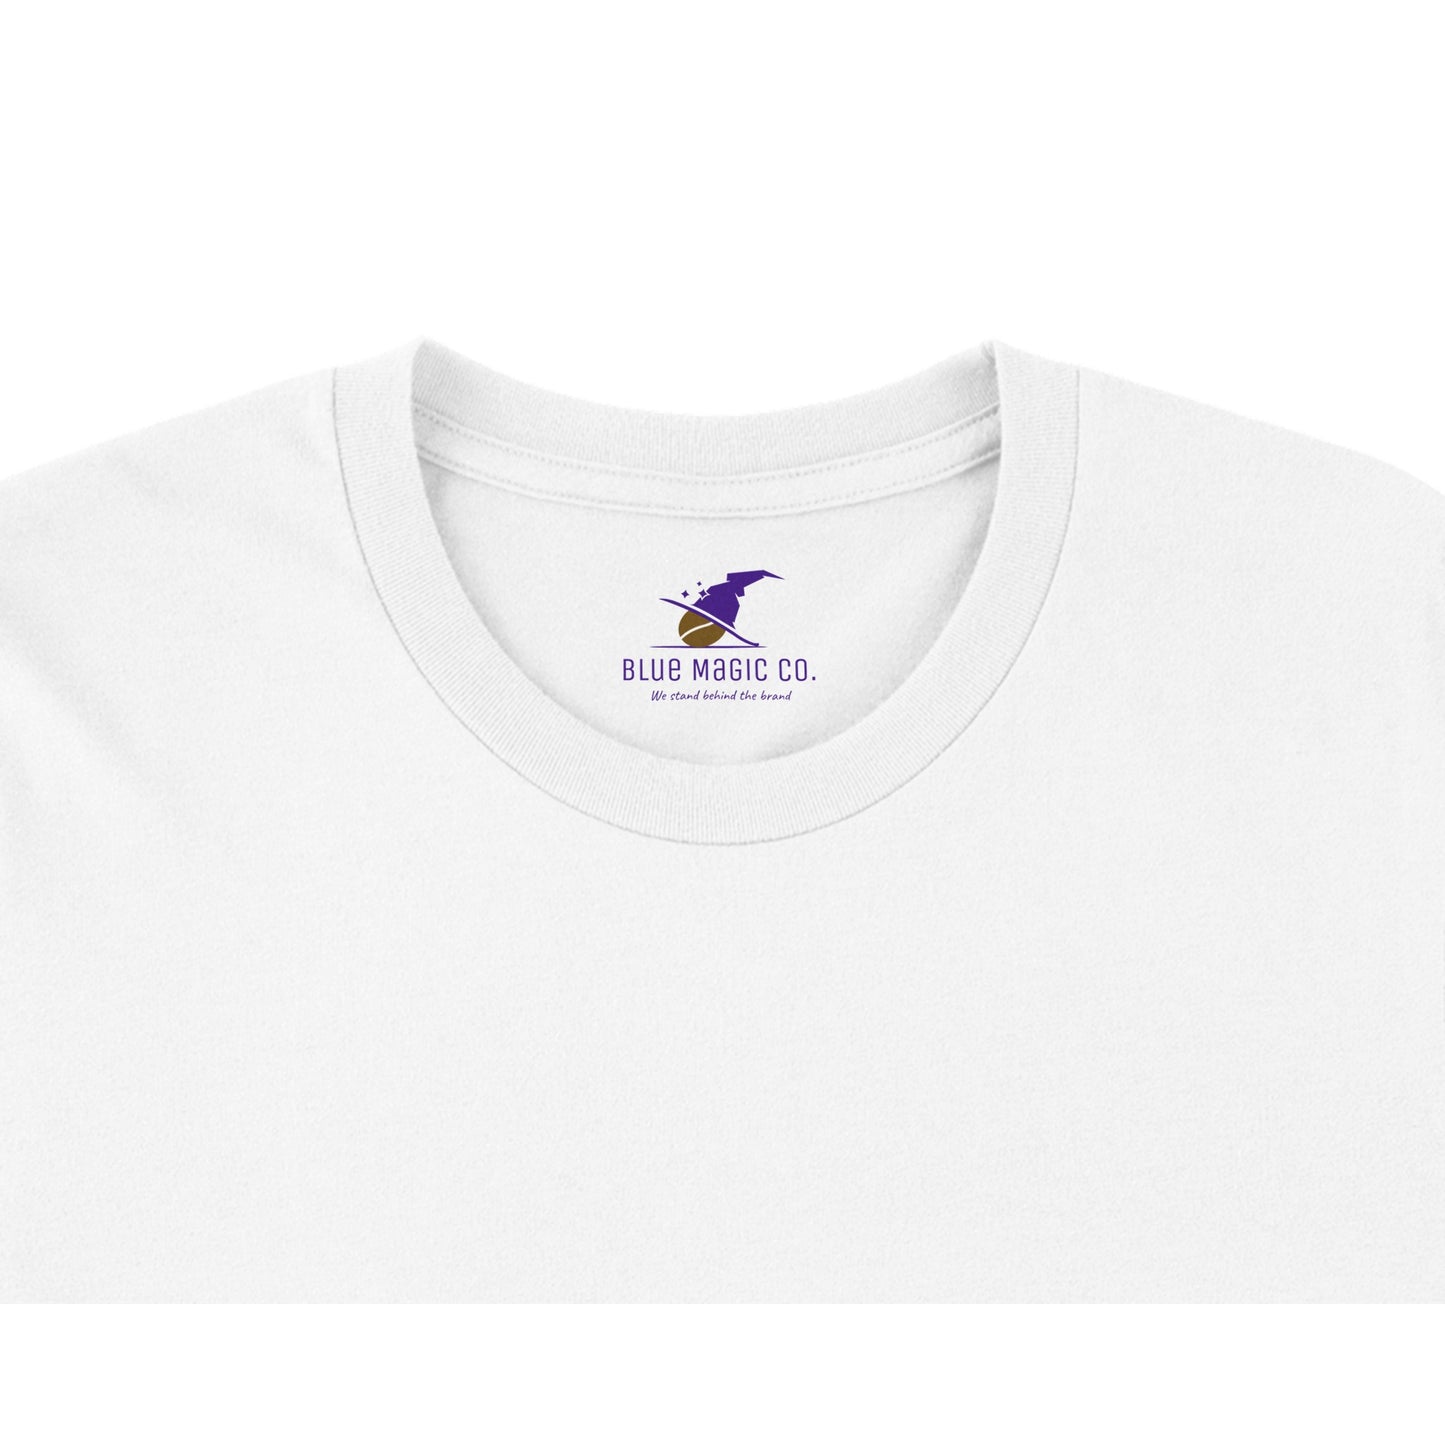 Premium Unisex "I Grind On My Own" T-shirt